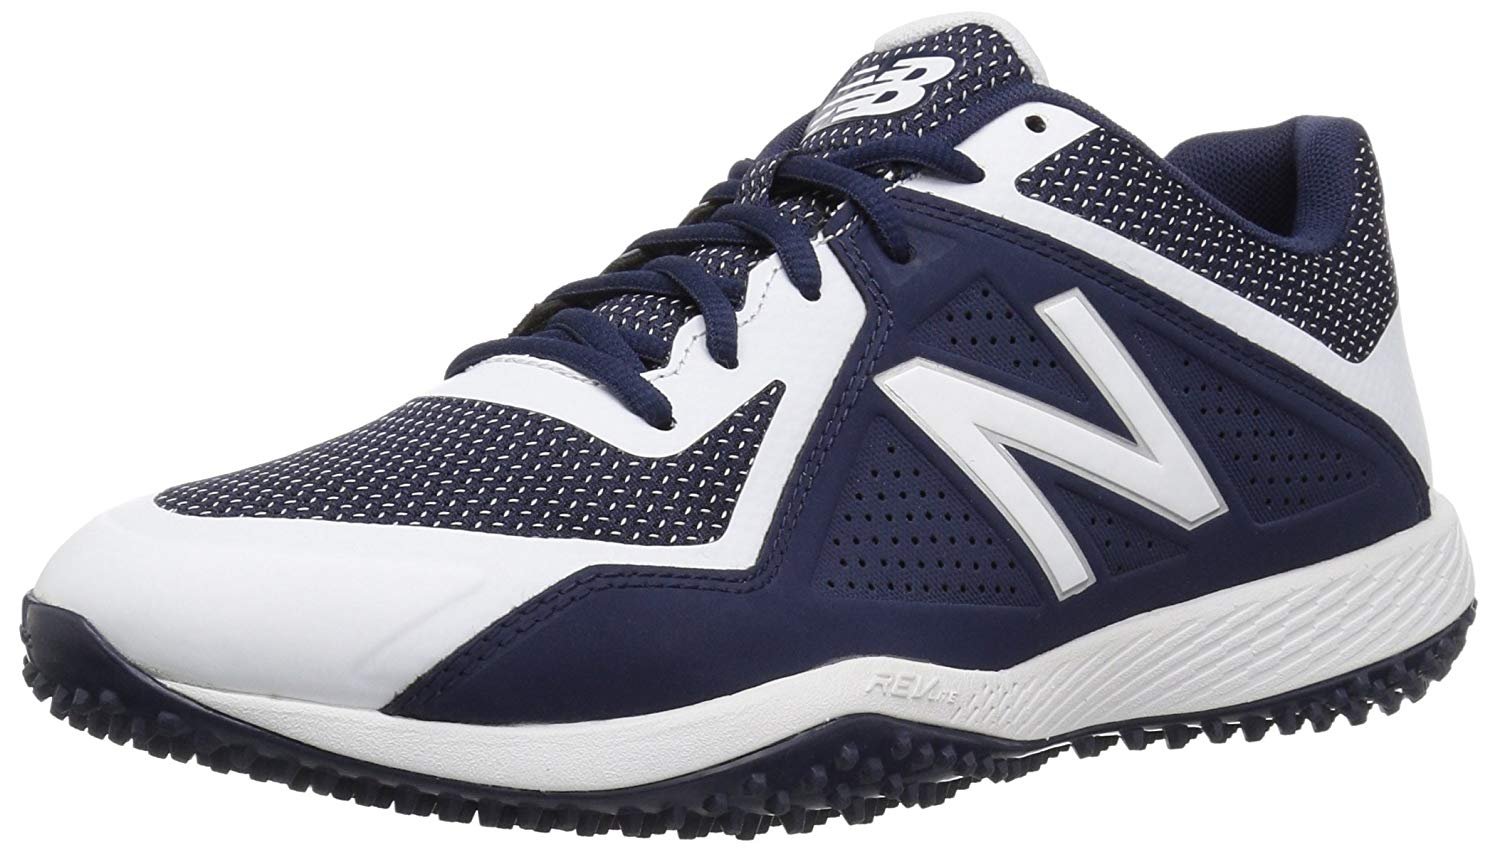 New Balance Turf 4040v4 Men's Baseball Shoes | eBay